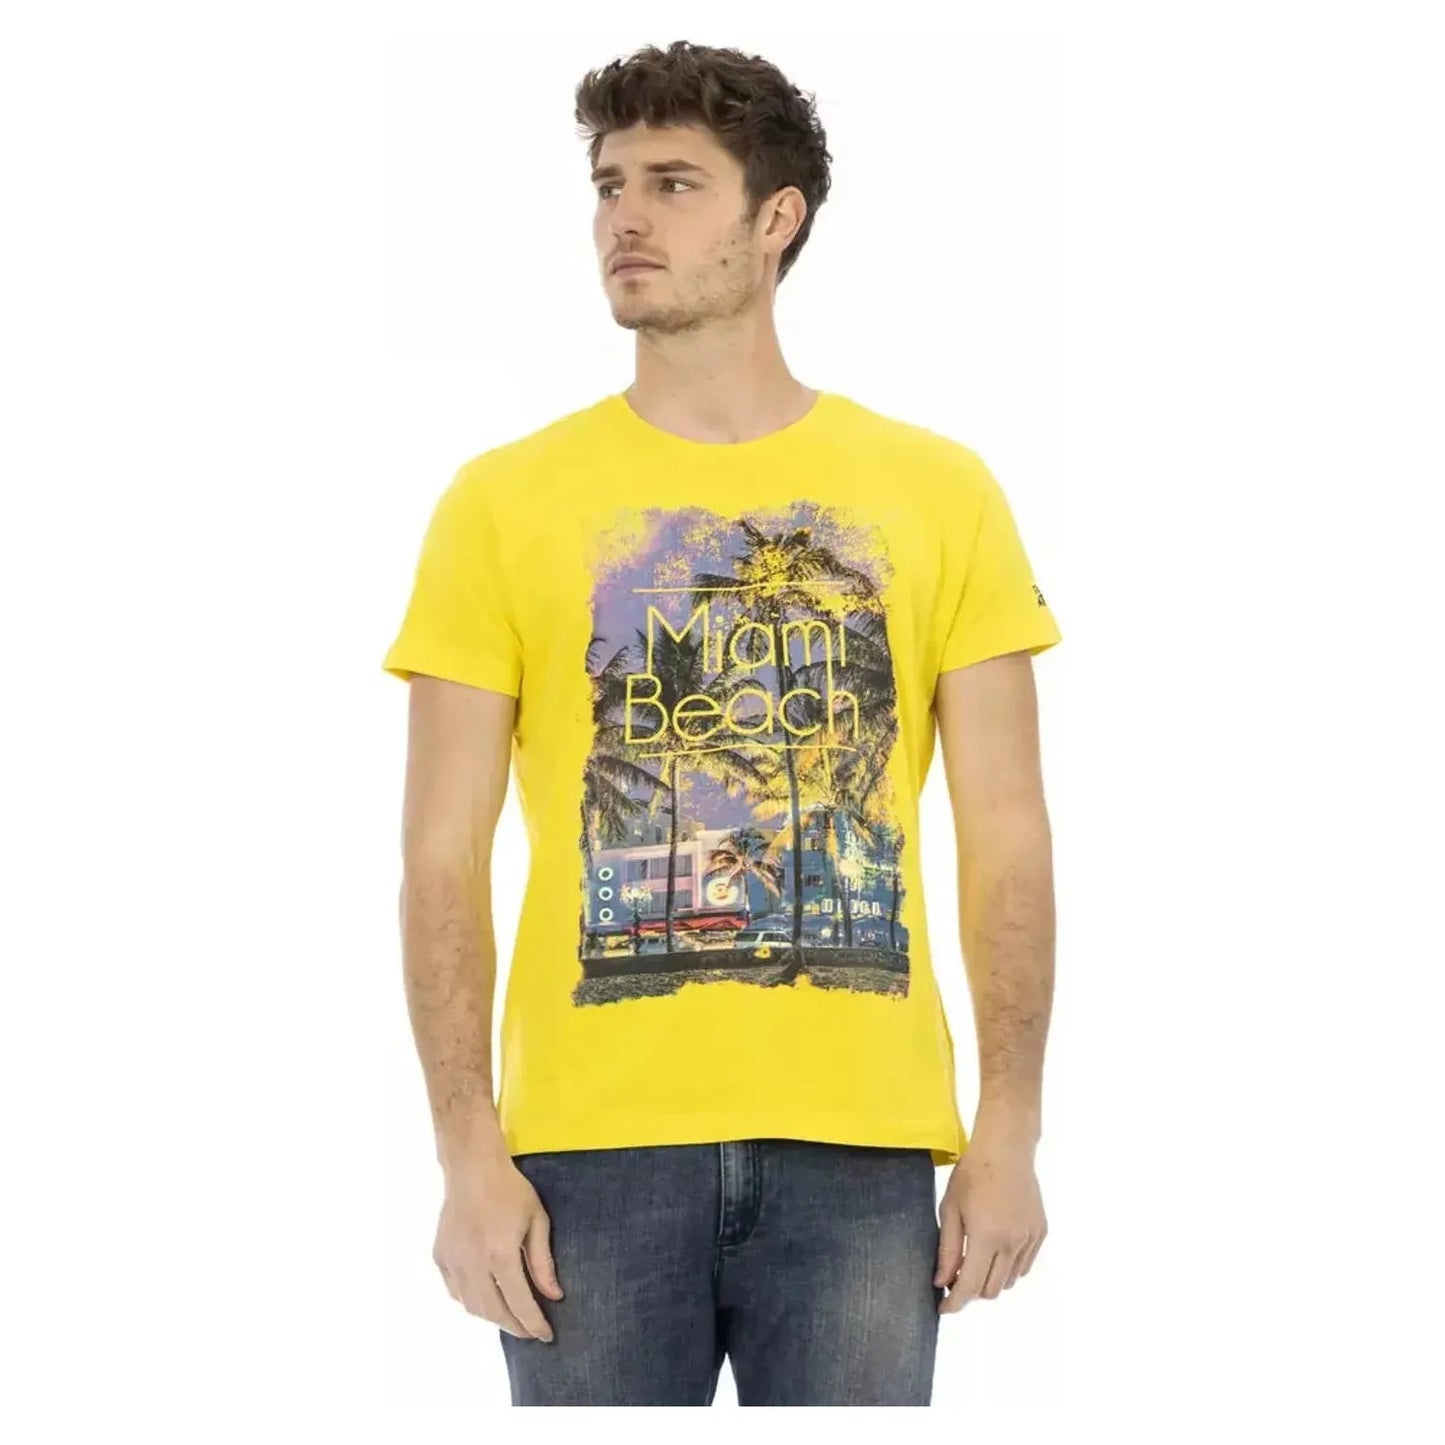 Trussardi Action Sunshine Yellow Cotton Blend T-Shirt yellow-cotton-t-shirt-11 product-22778-1163050249-24-a73270ab-7f2.webp